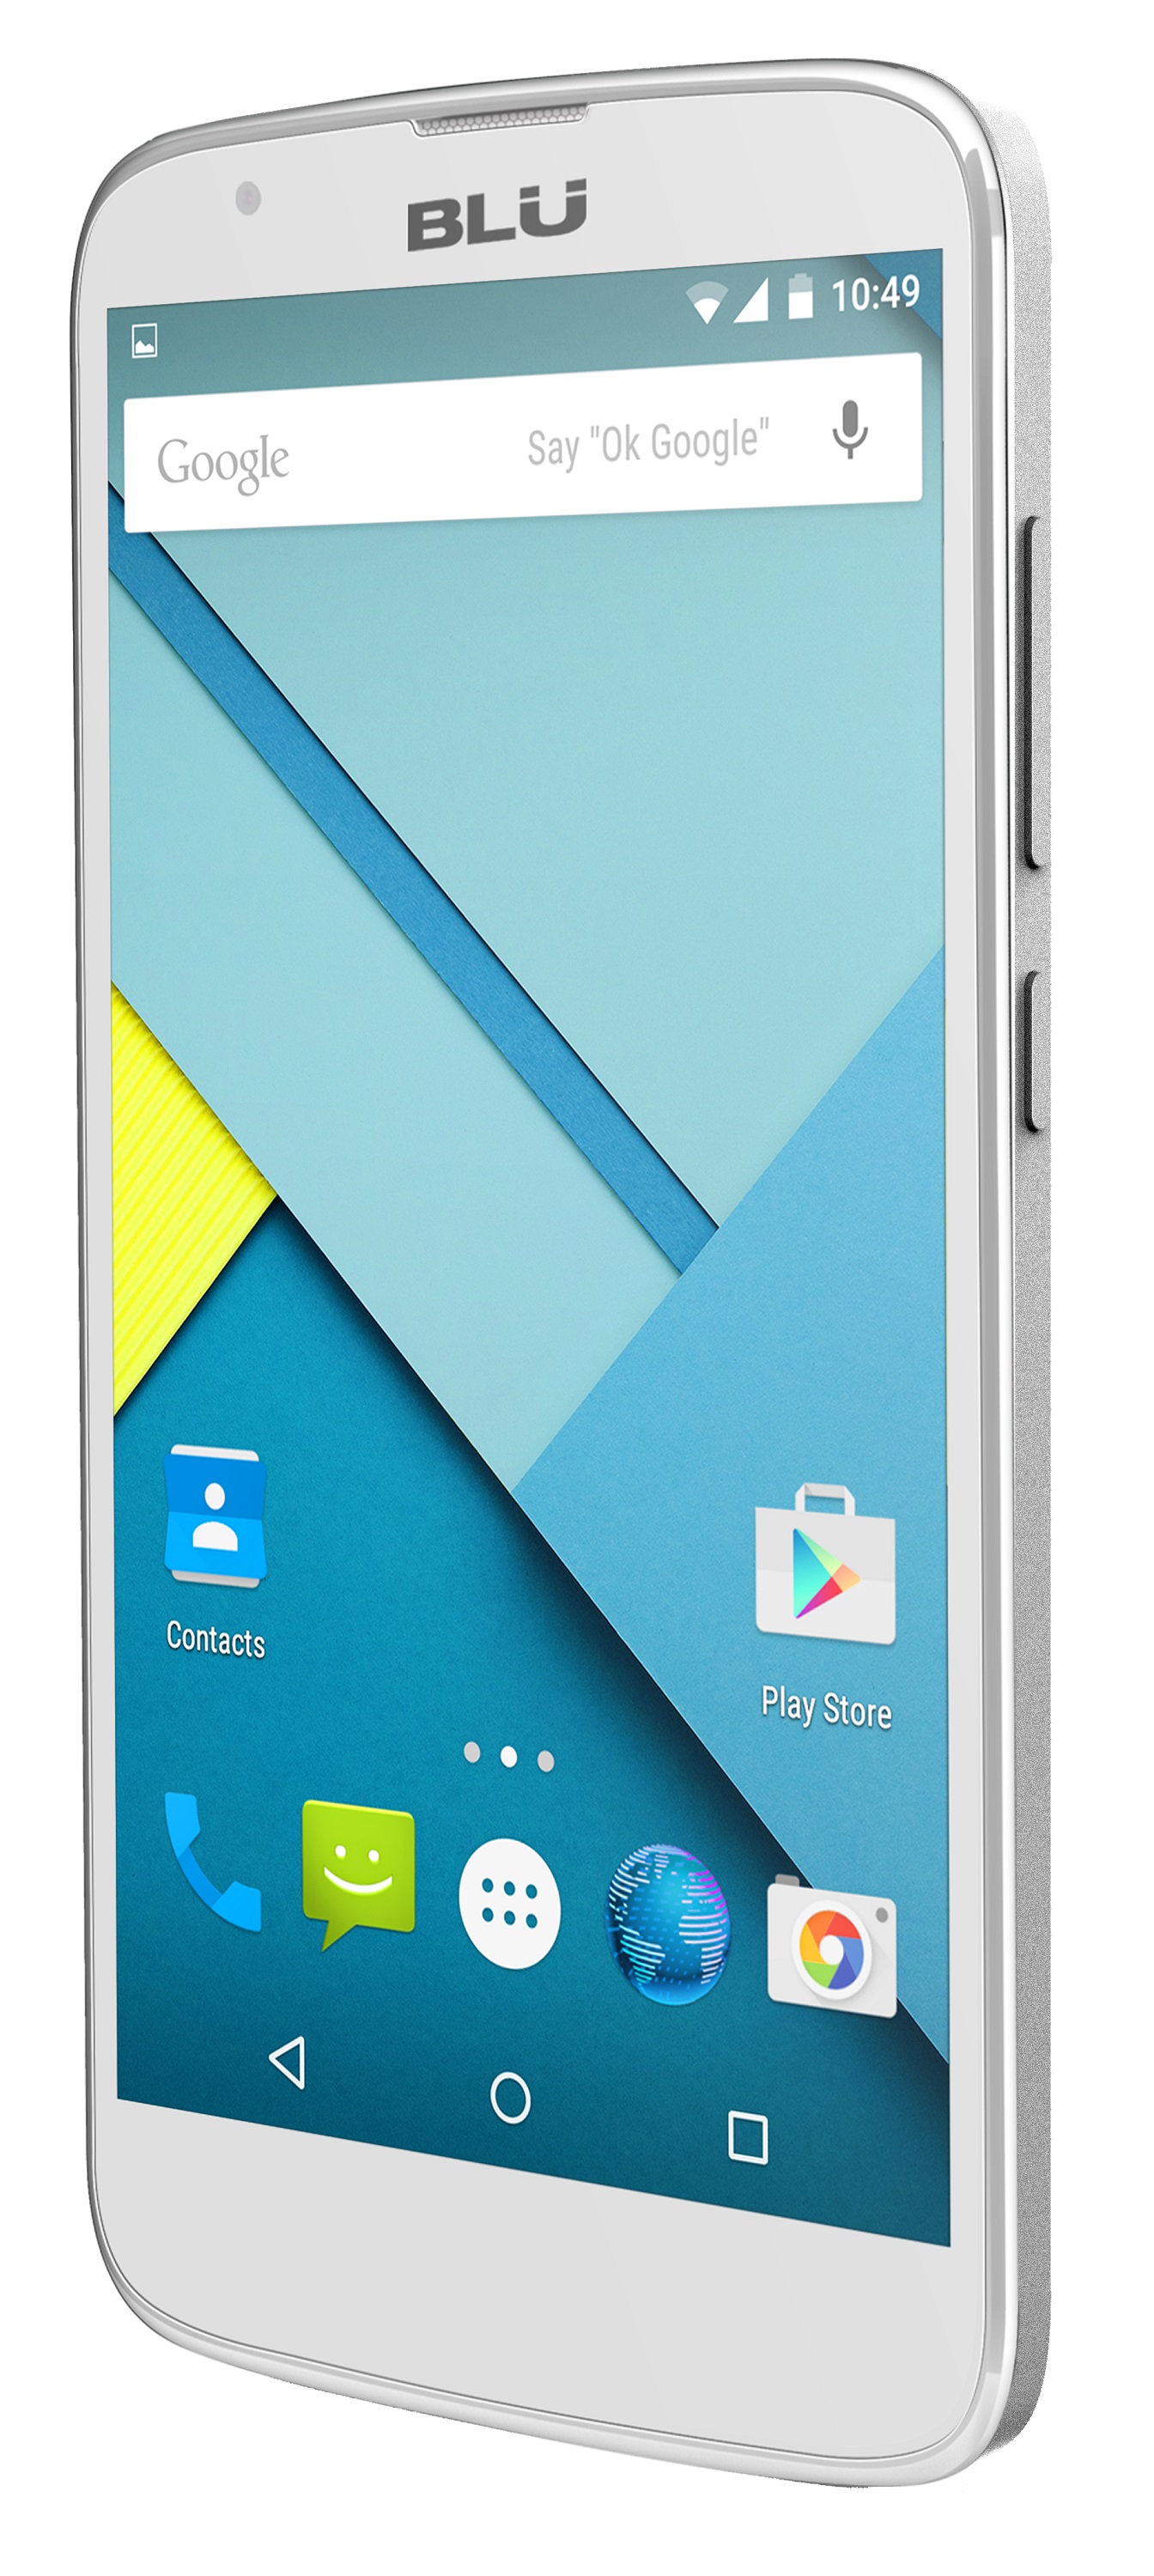 BLU BLU Studio G D790u Unlocked GSM Quad Core HSPA+ Android Phone